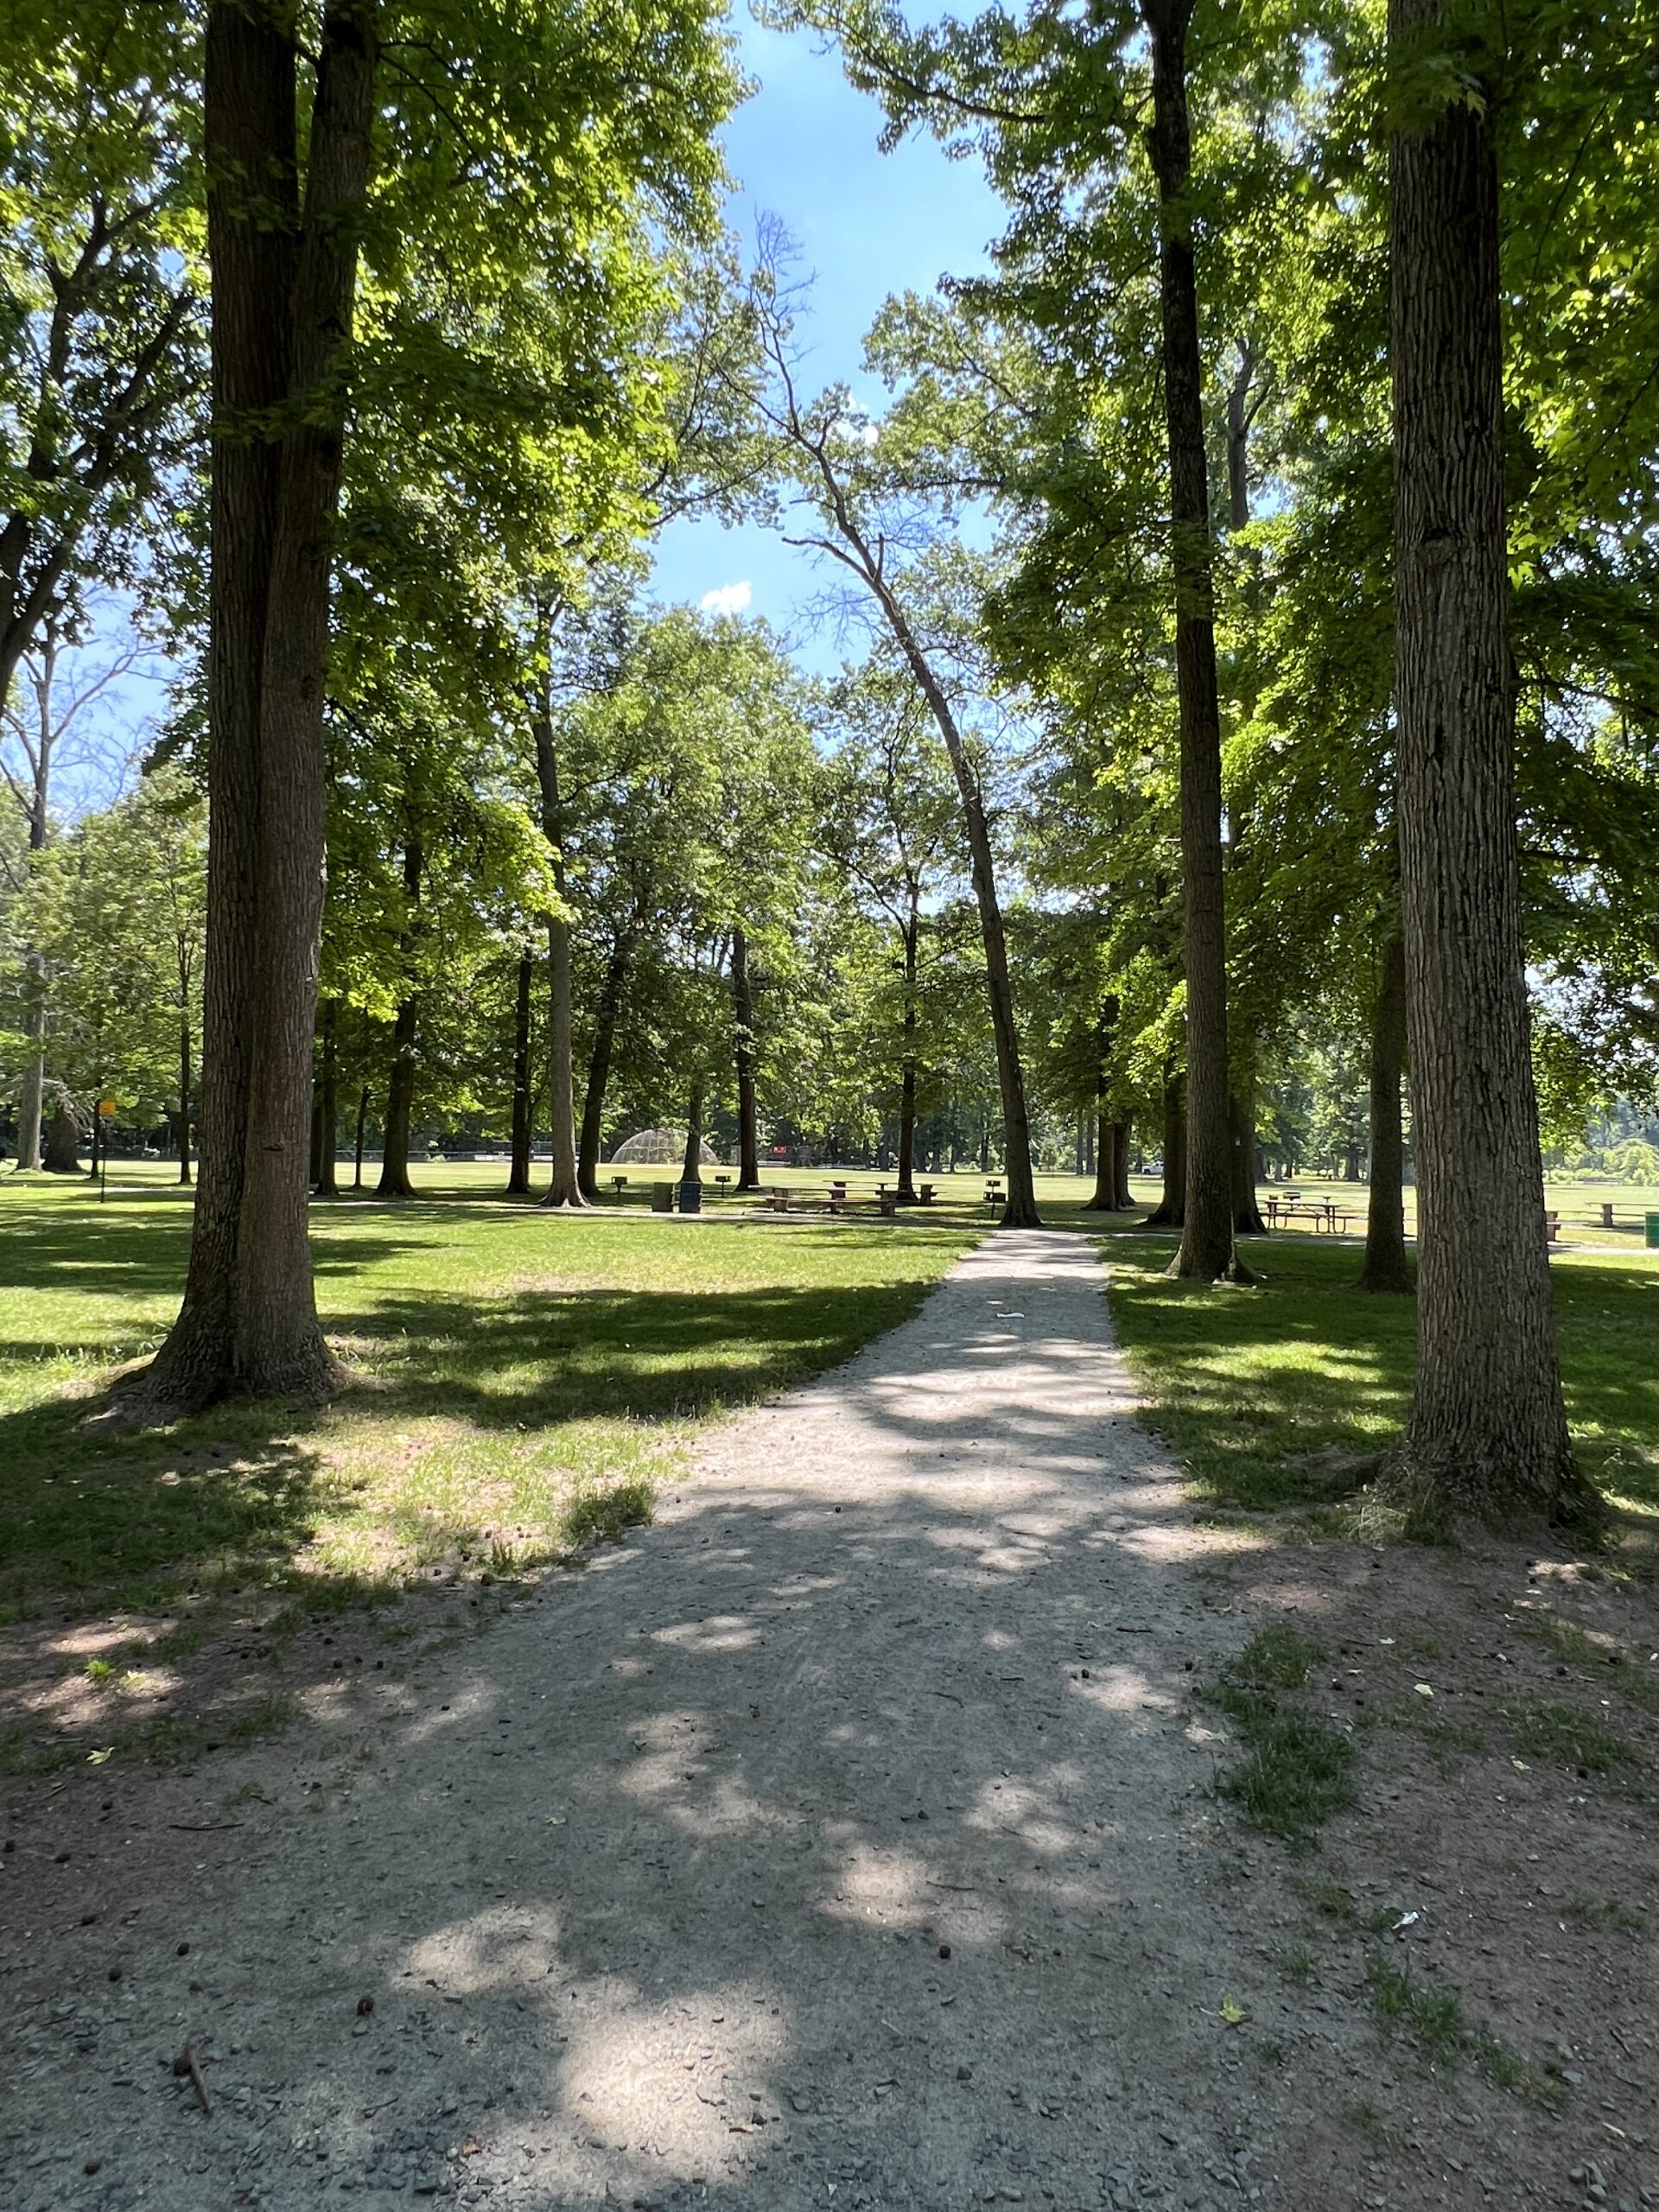 Nomahegan Park in Cranford NJ - Extras - Walking path